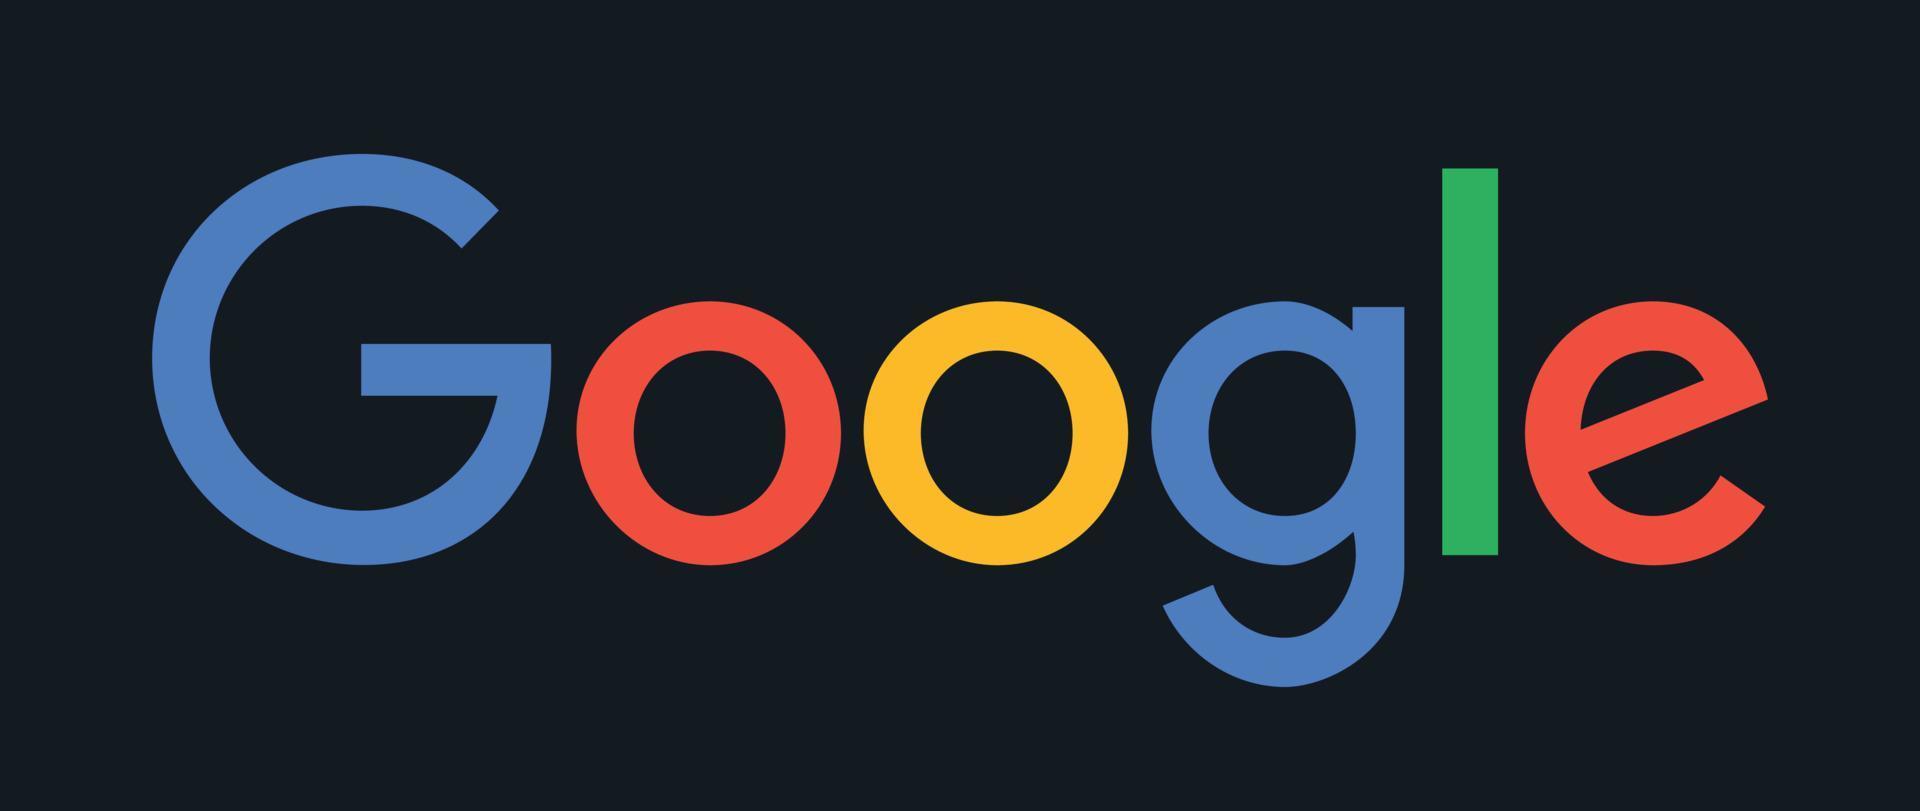 Colourful Google Text Logo On Dark Background vector